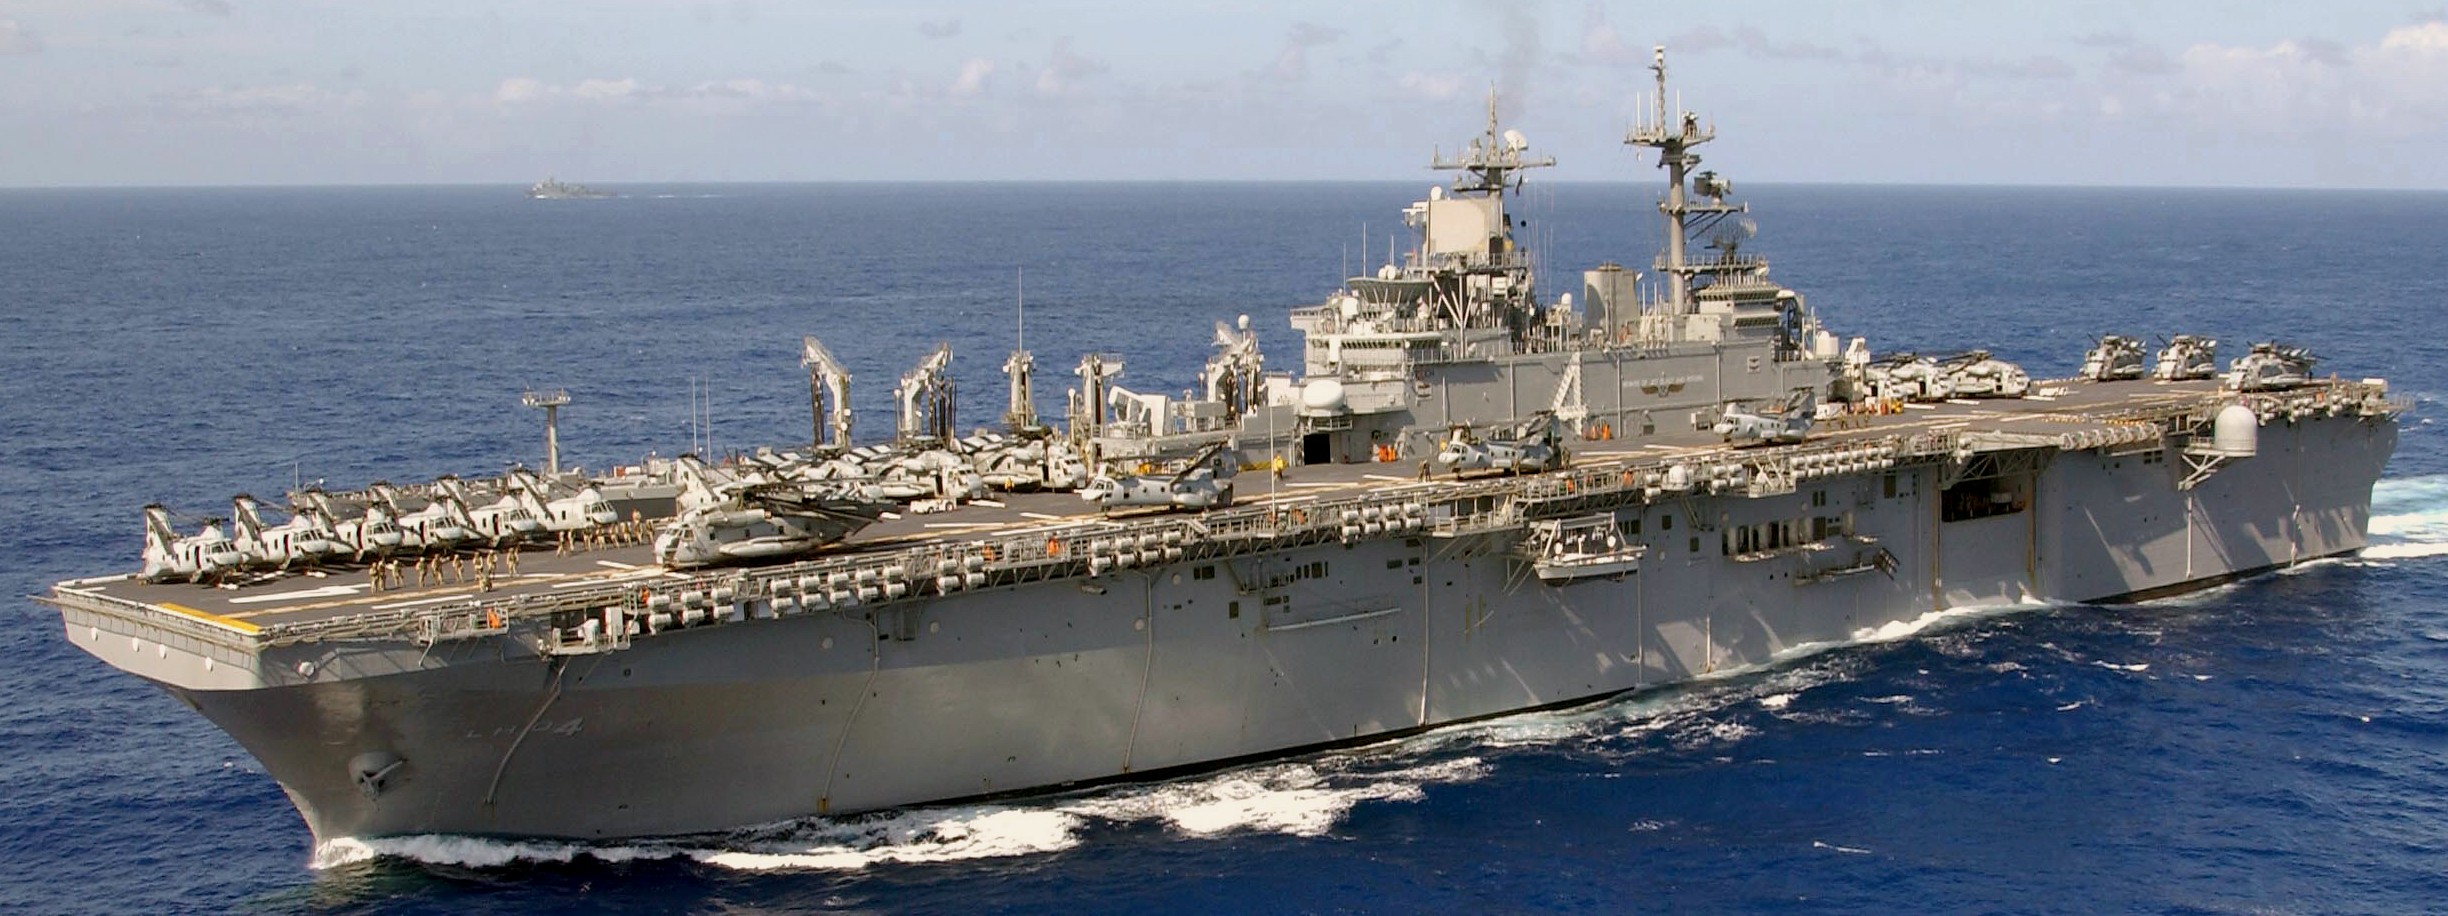 lhd-4 uss boxer wasp class amphibious assault ship dock landing us navy atf-w enduring freedom 14